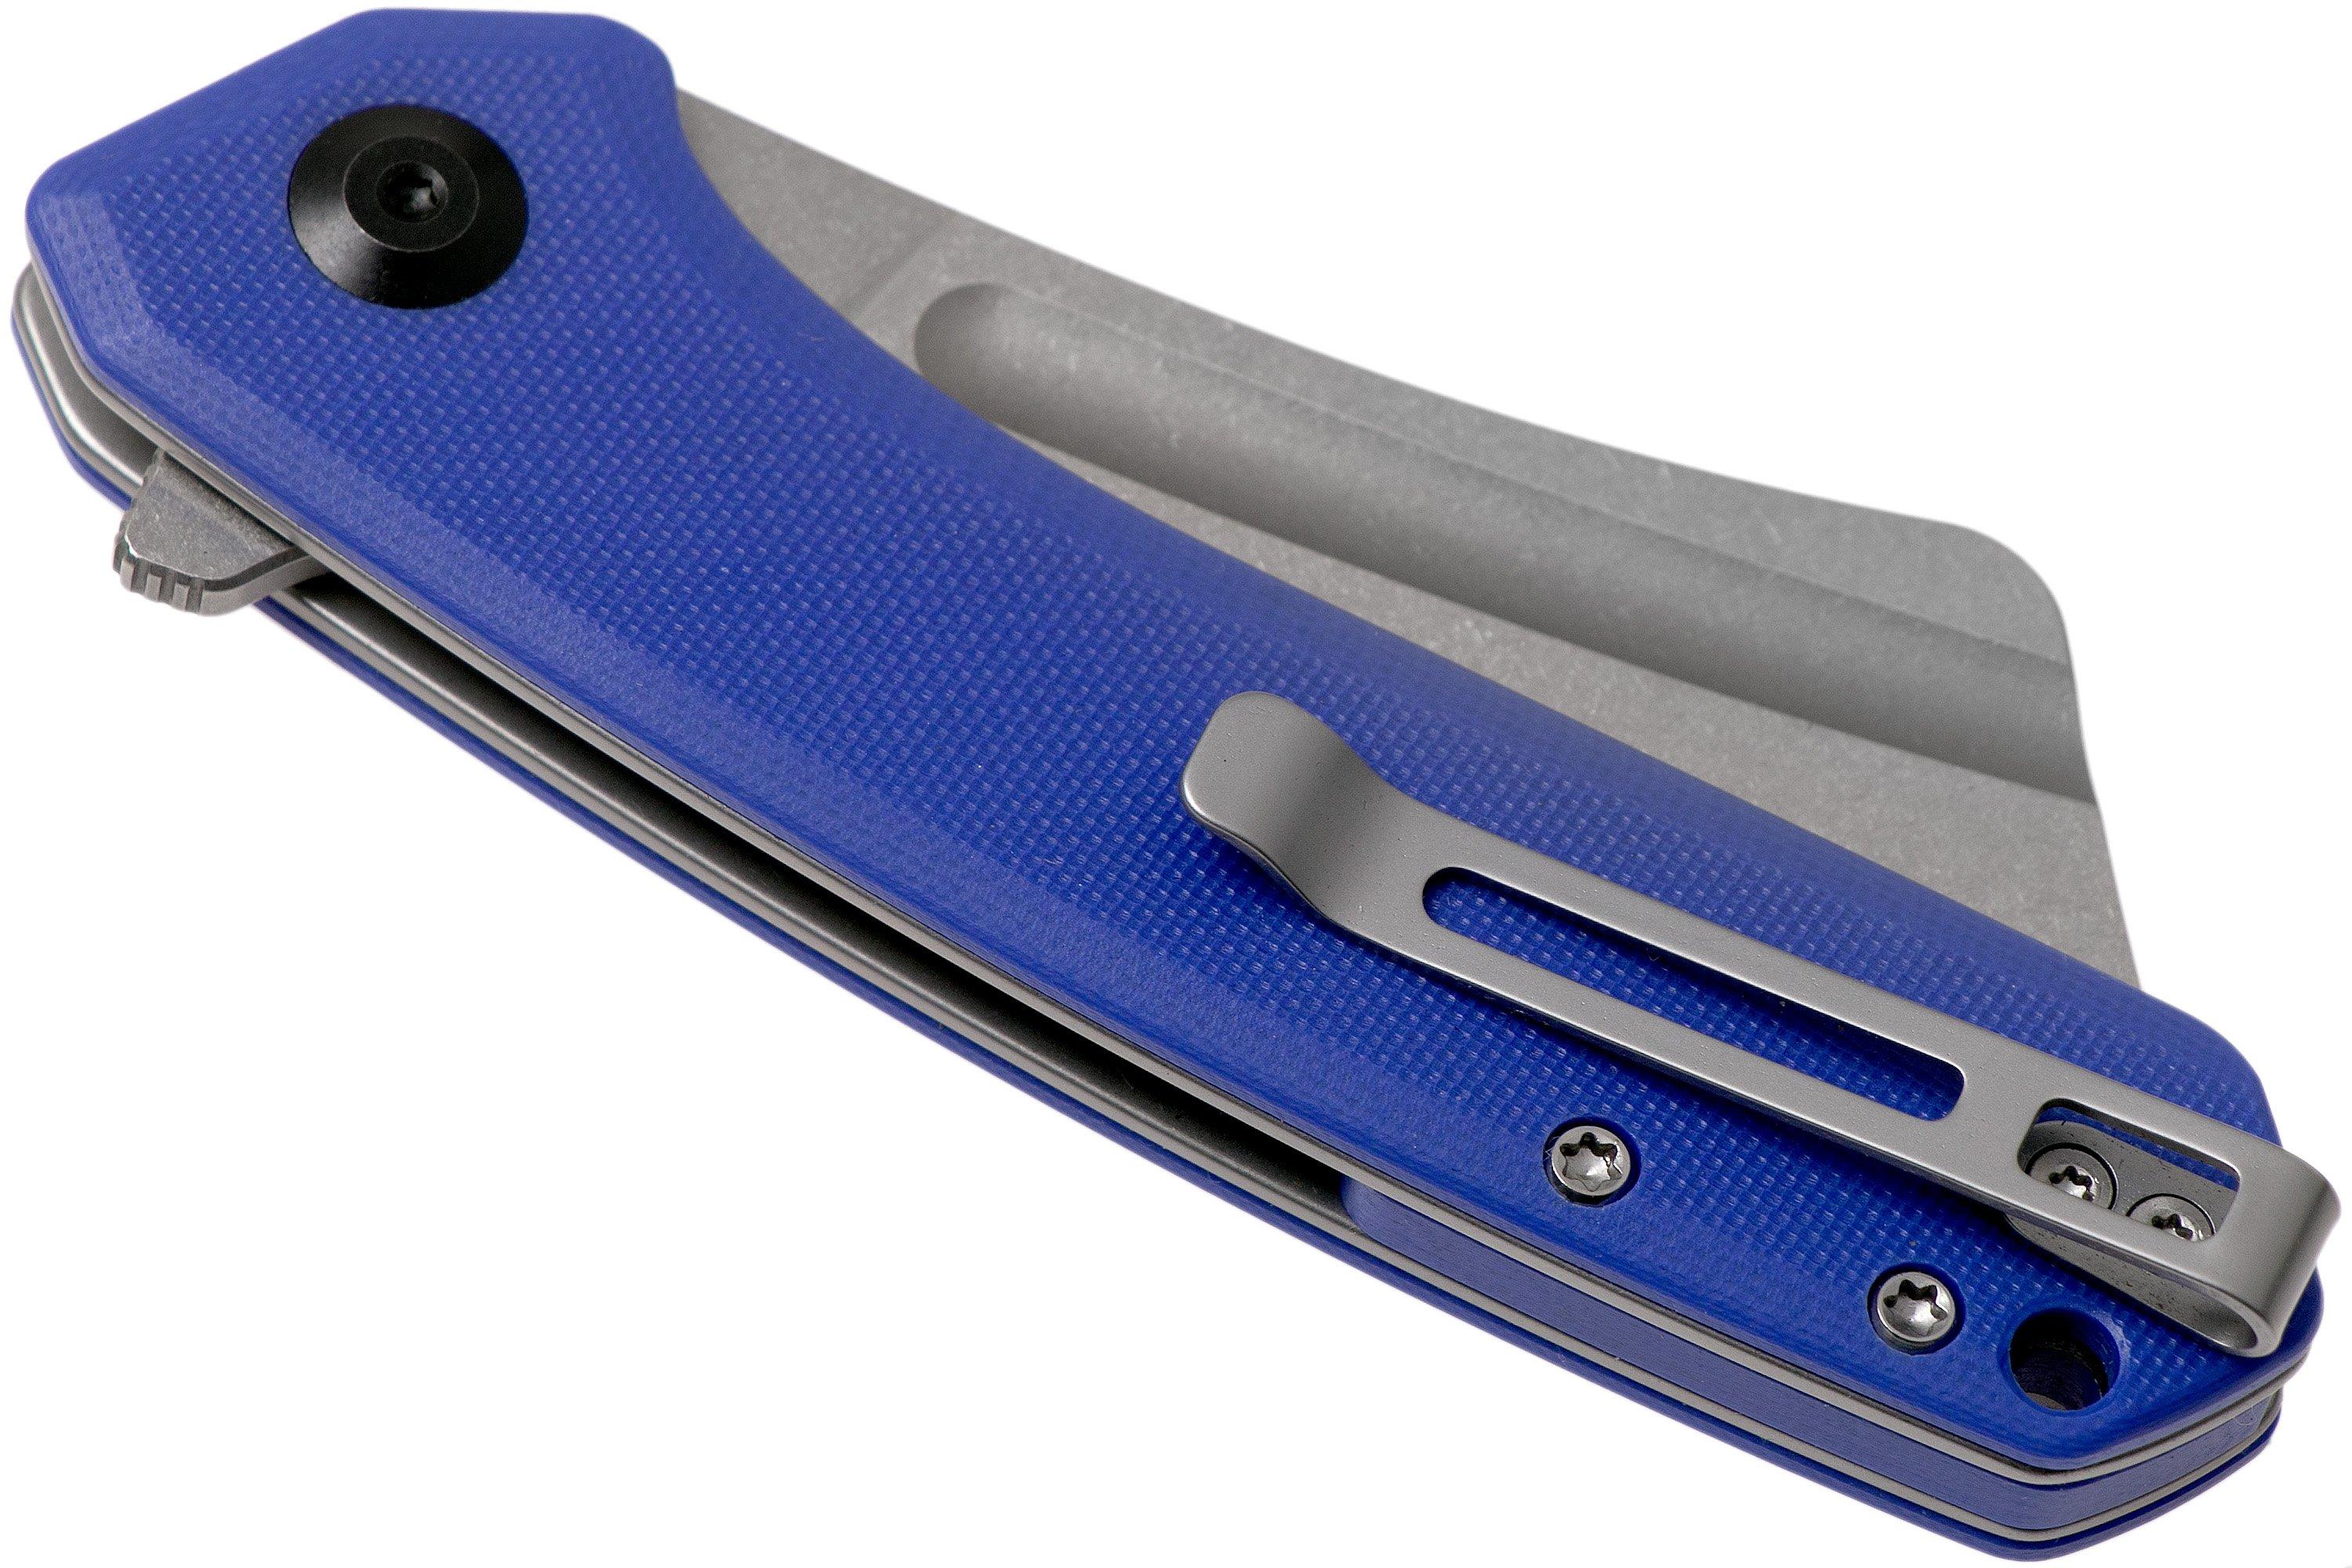 Civivi Mini Bullmastiff C2004B Blue G10 pocket knife | Advantageously ...